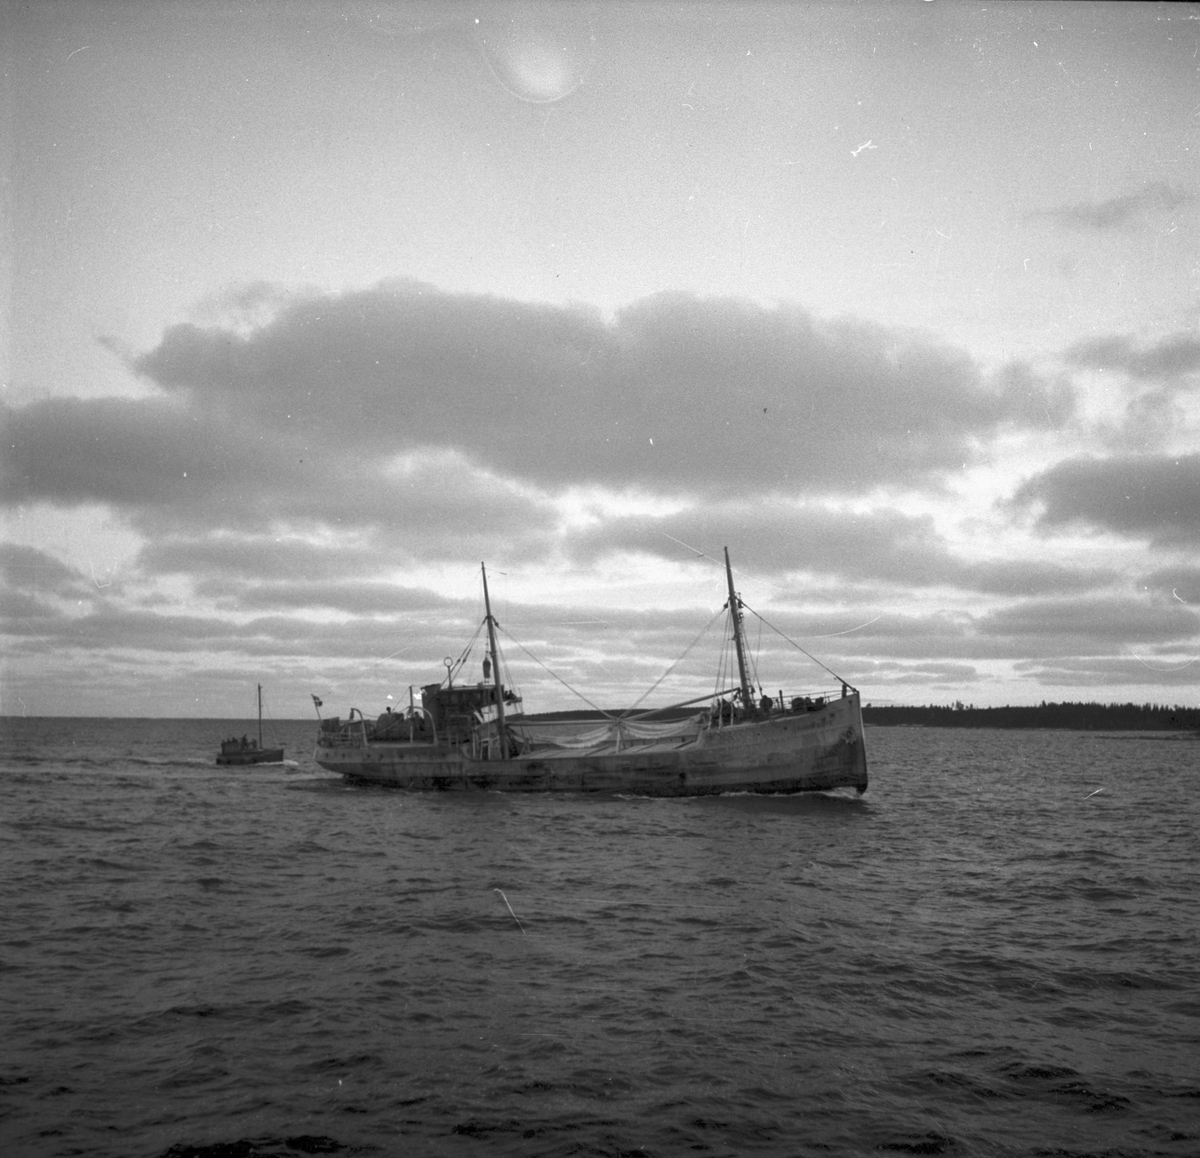 Bildreportage, nödställd båt "Hans Boye". 8 januari 1954.
Storm över Gävle.